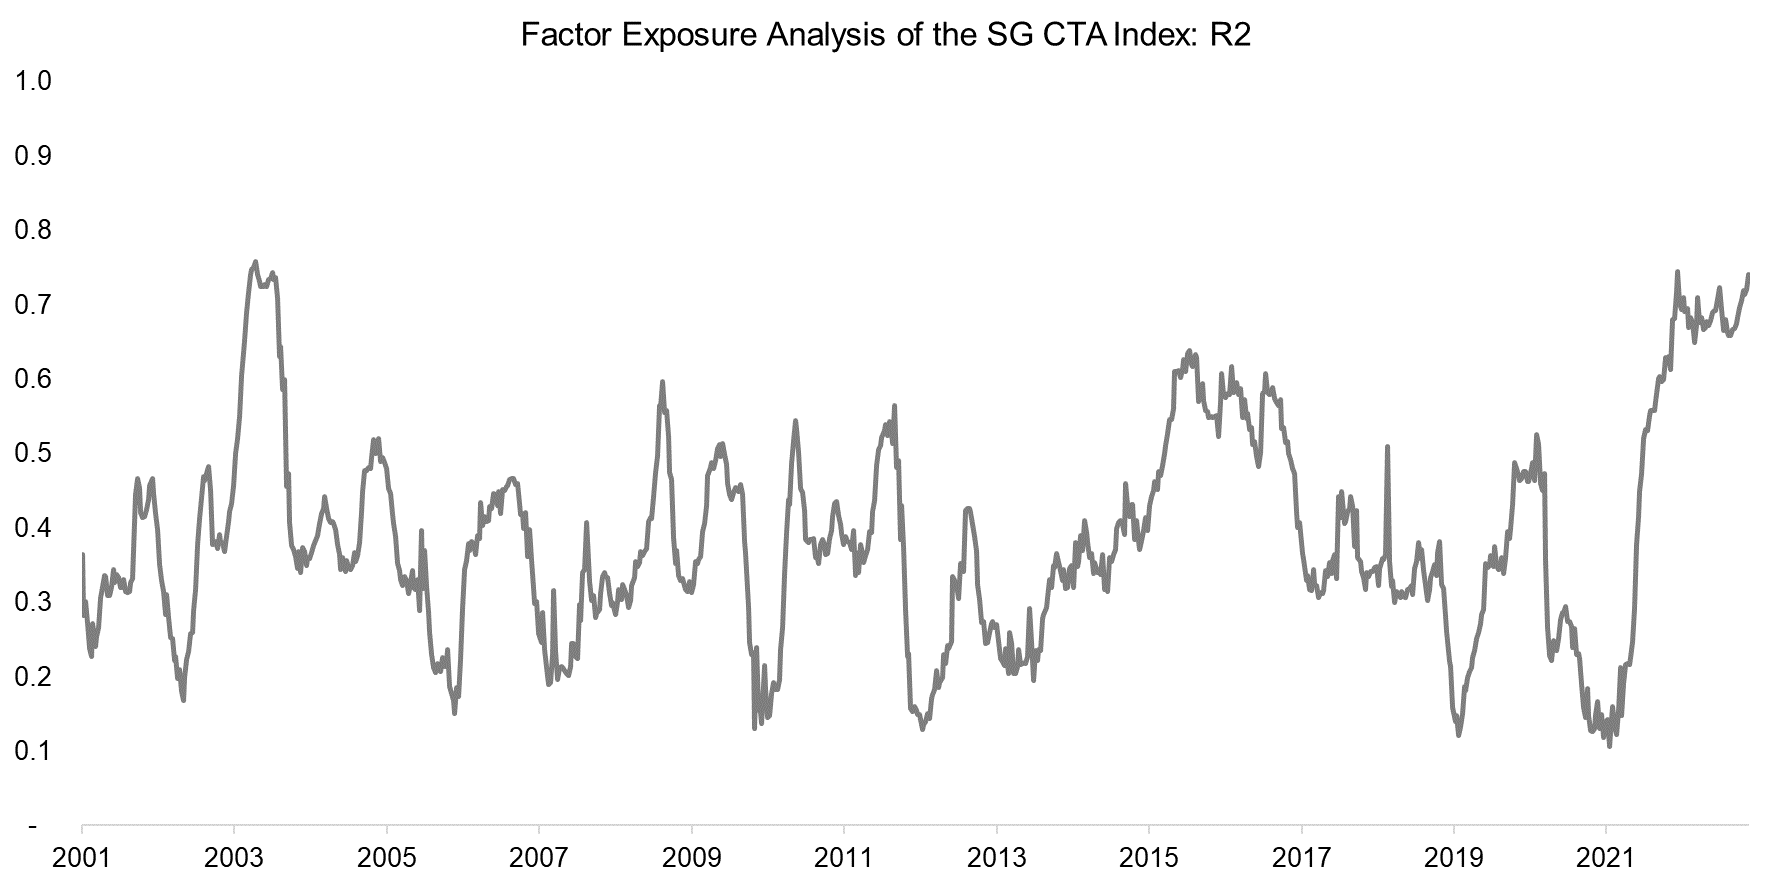 Factor Exposure Analysis of the SG CTA Index R2